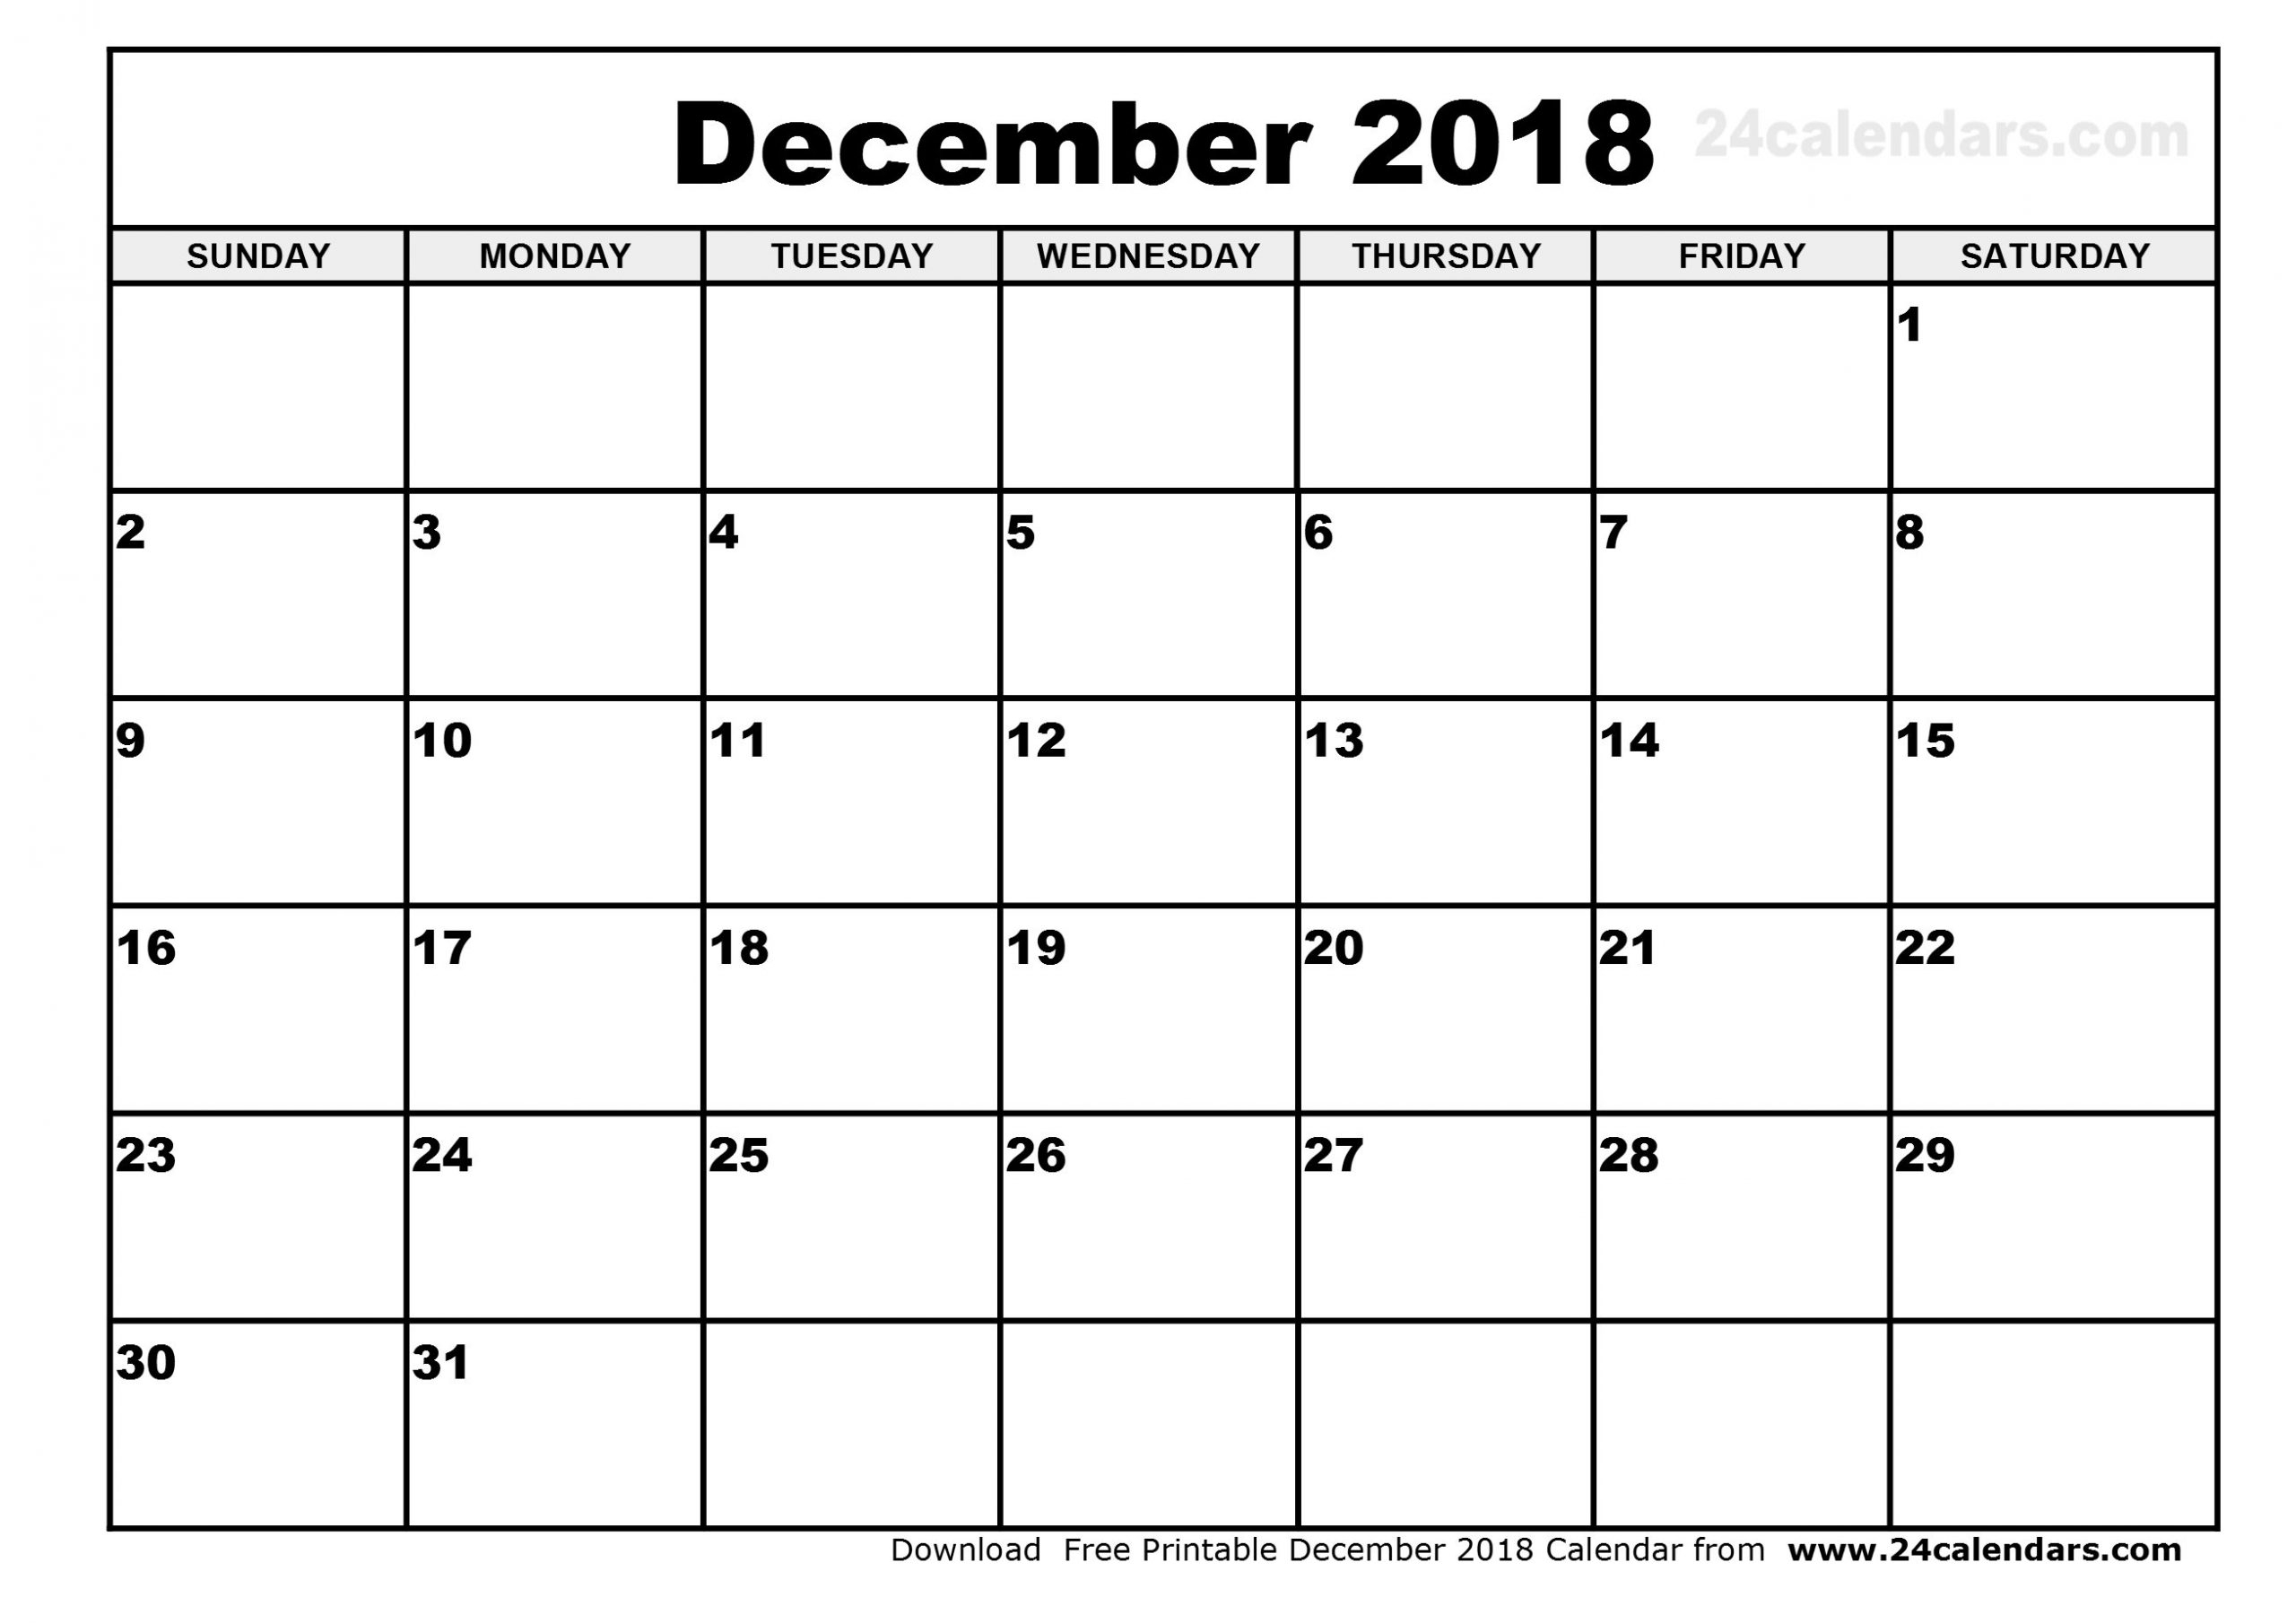 December 2018 Calendar - Free Download